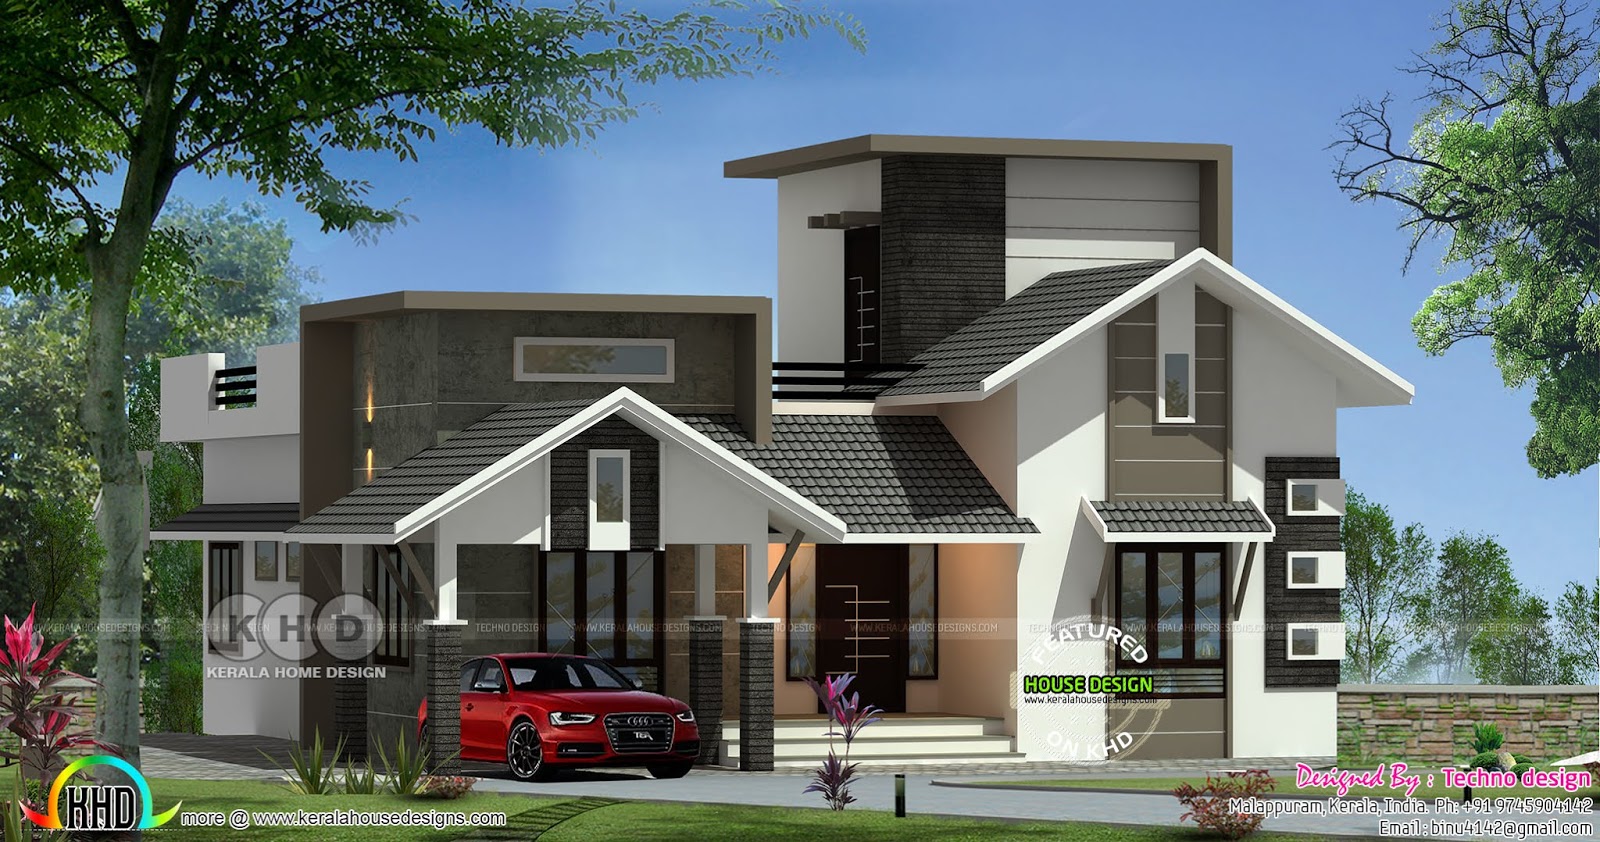 2 Bedroom Mixed Roof Budget Home Plan Kerala Home Design